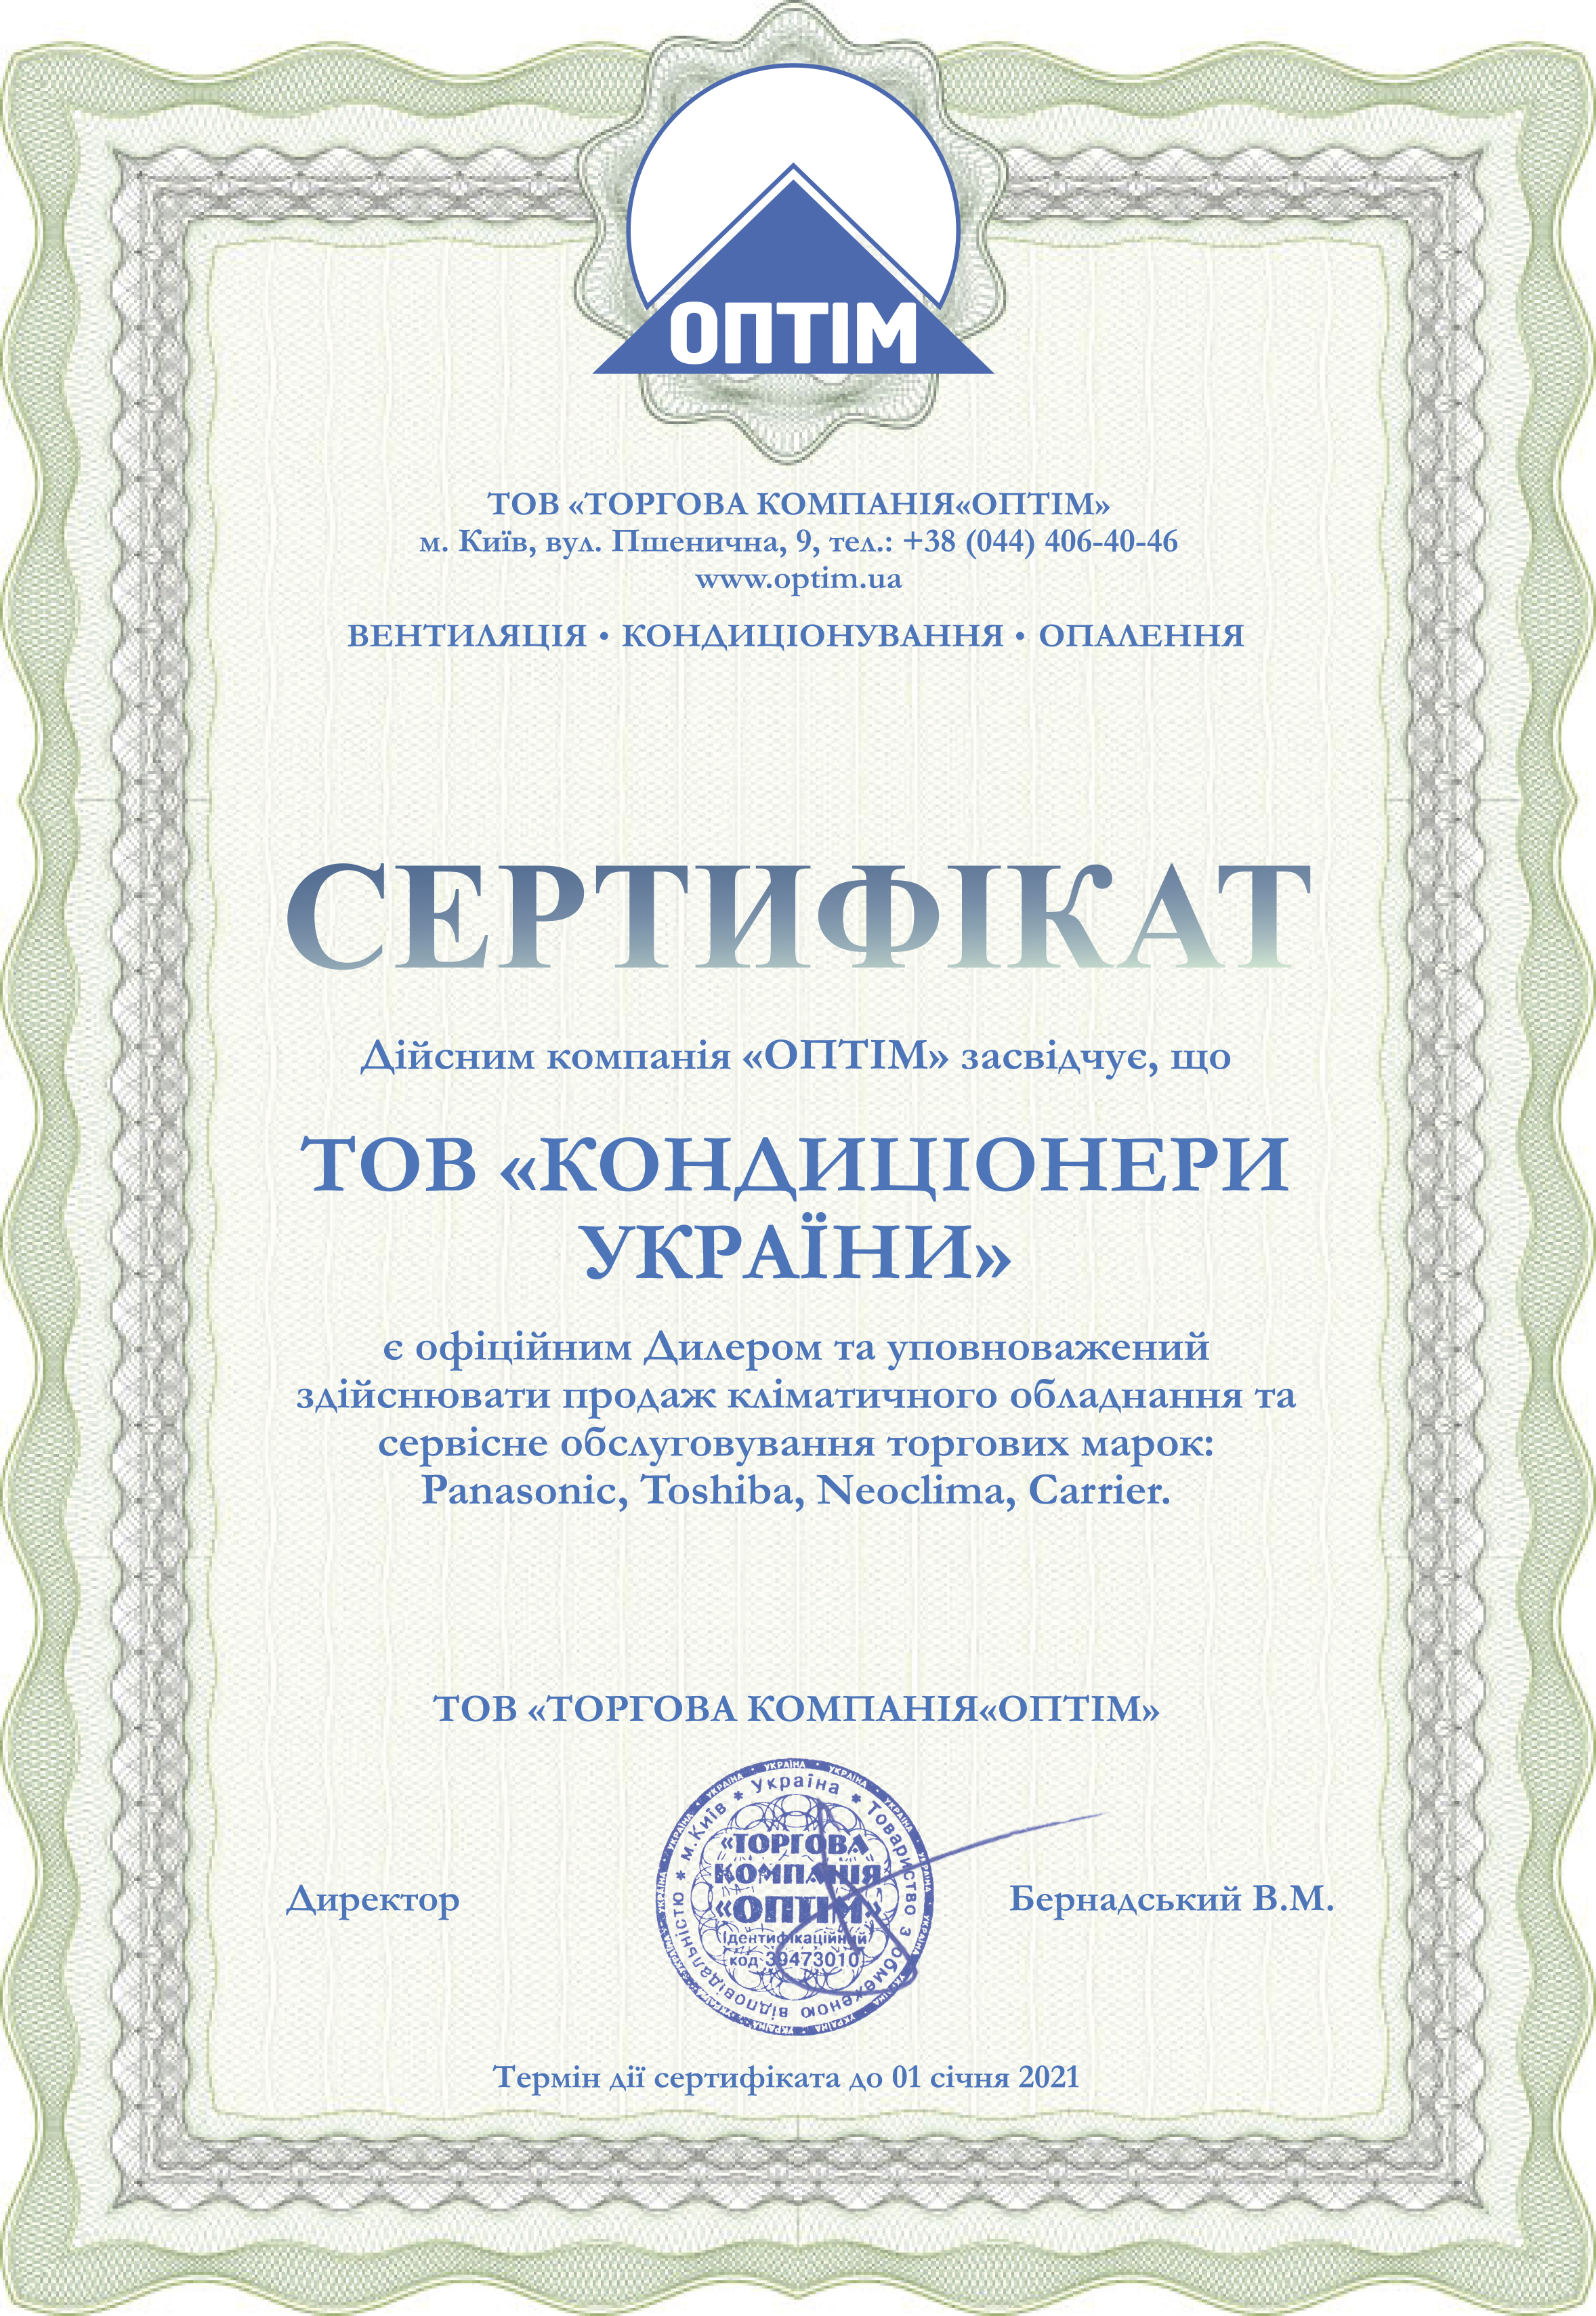 Сертификат по кондиционерам Panasonic, Toshiba, Neoclima, Carrier